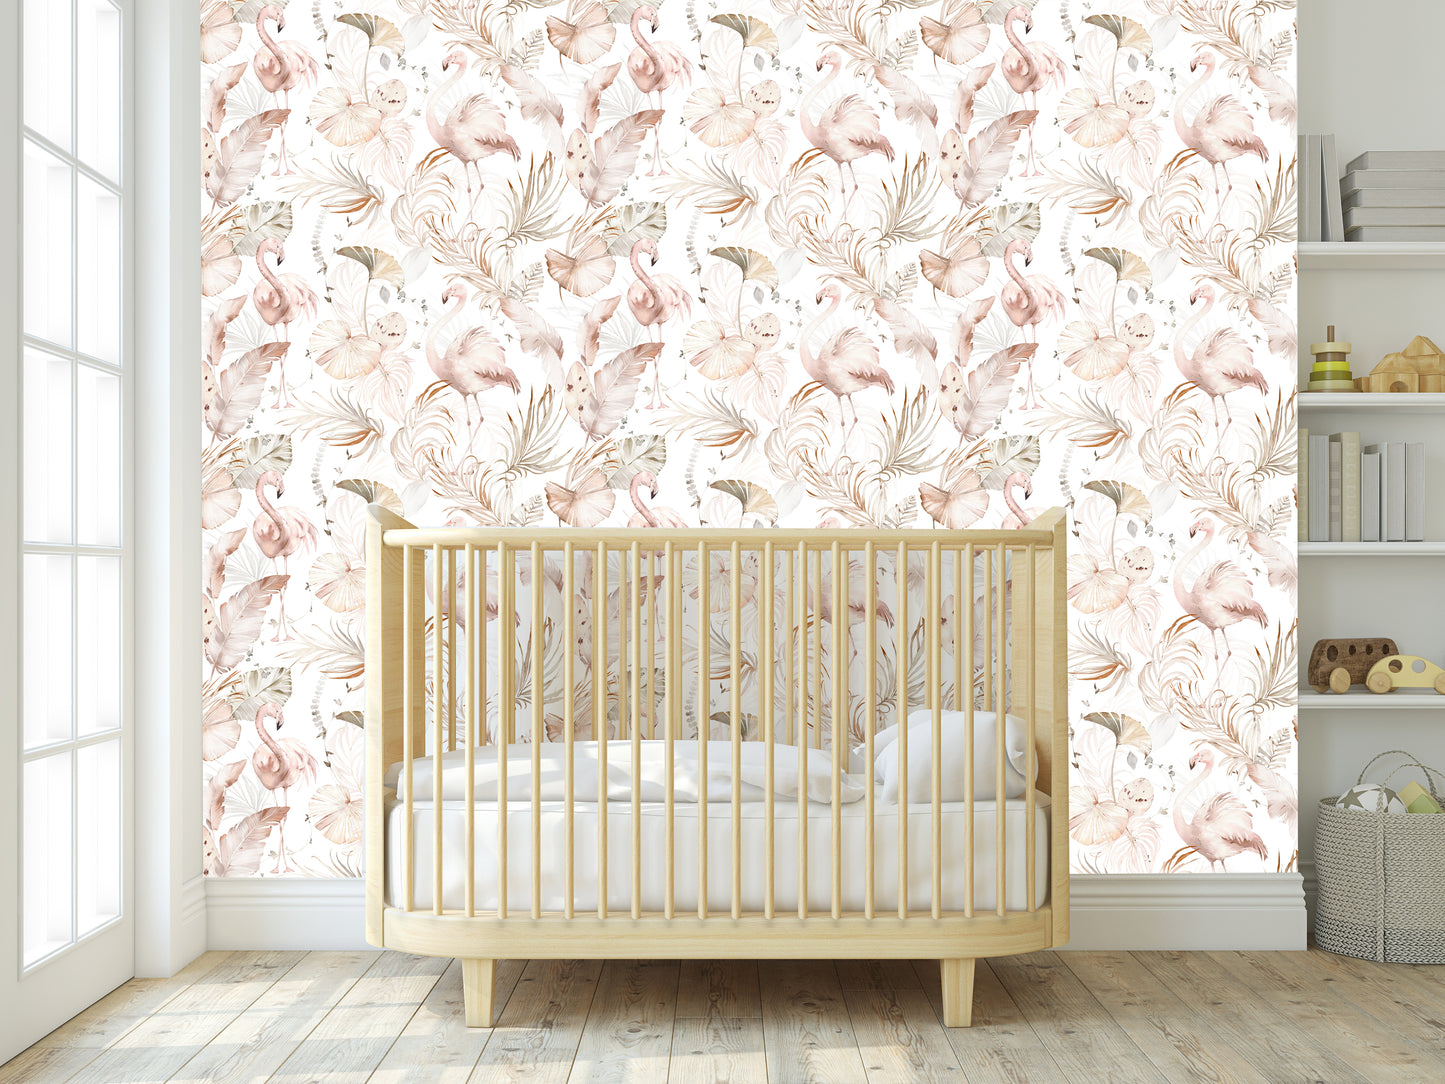 Fantastical Flamingos Removable Peel And Stick Wallpaper